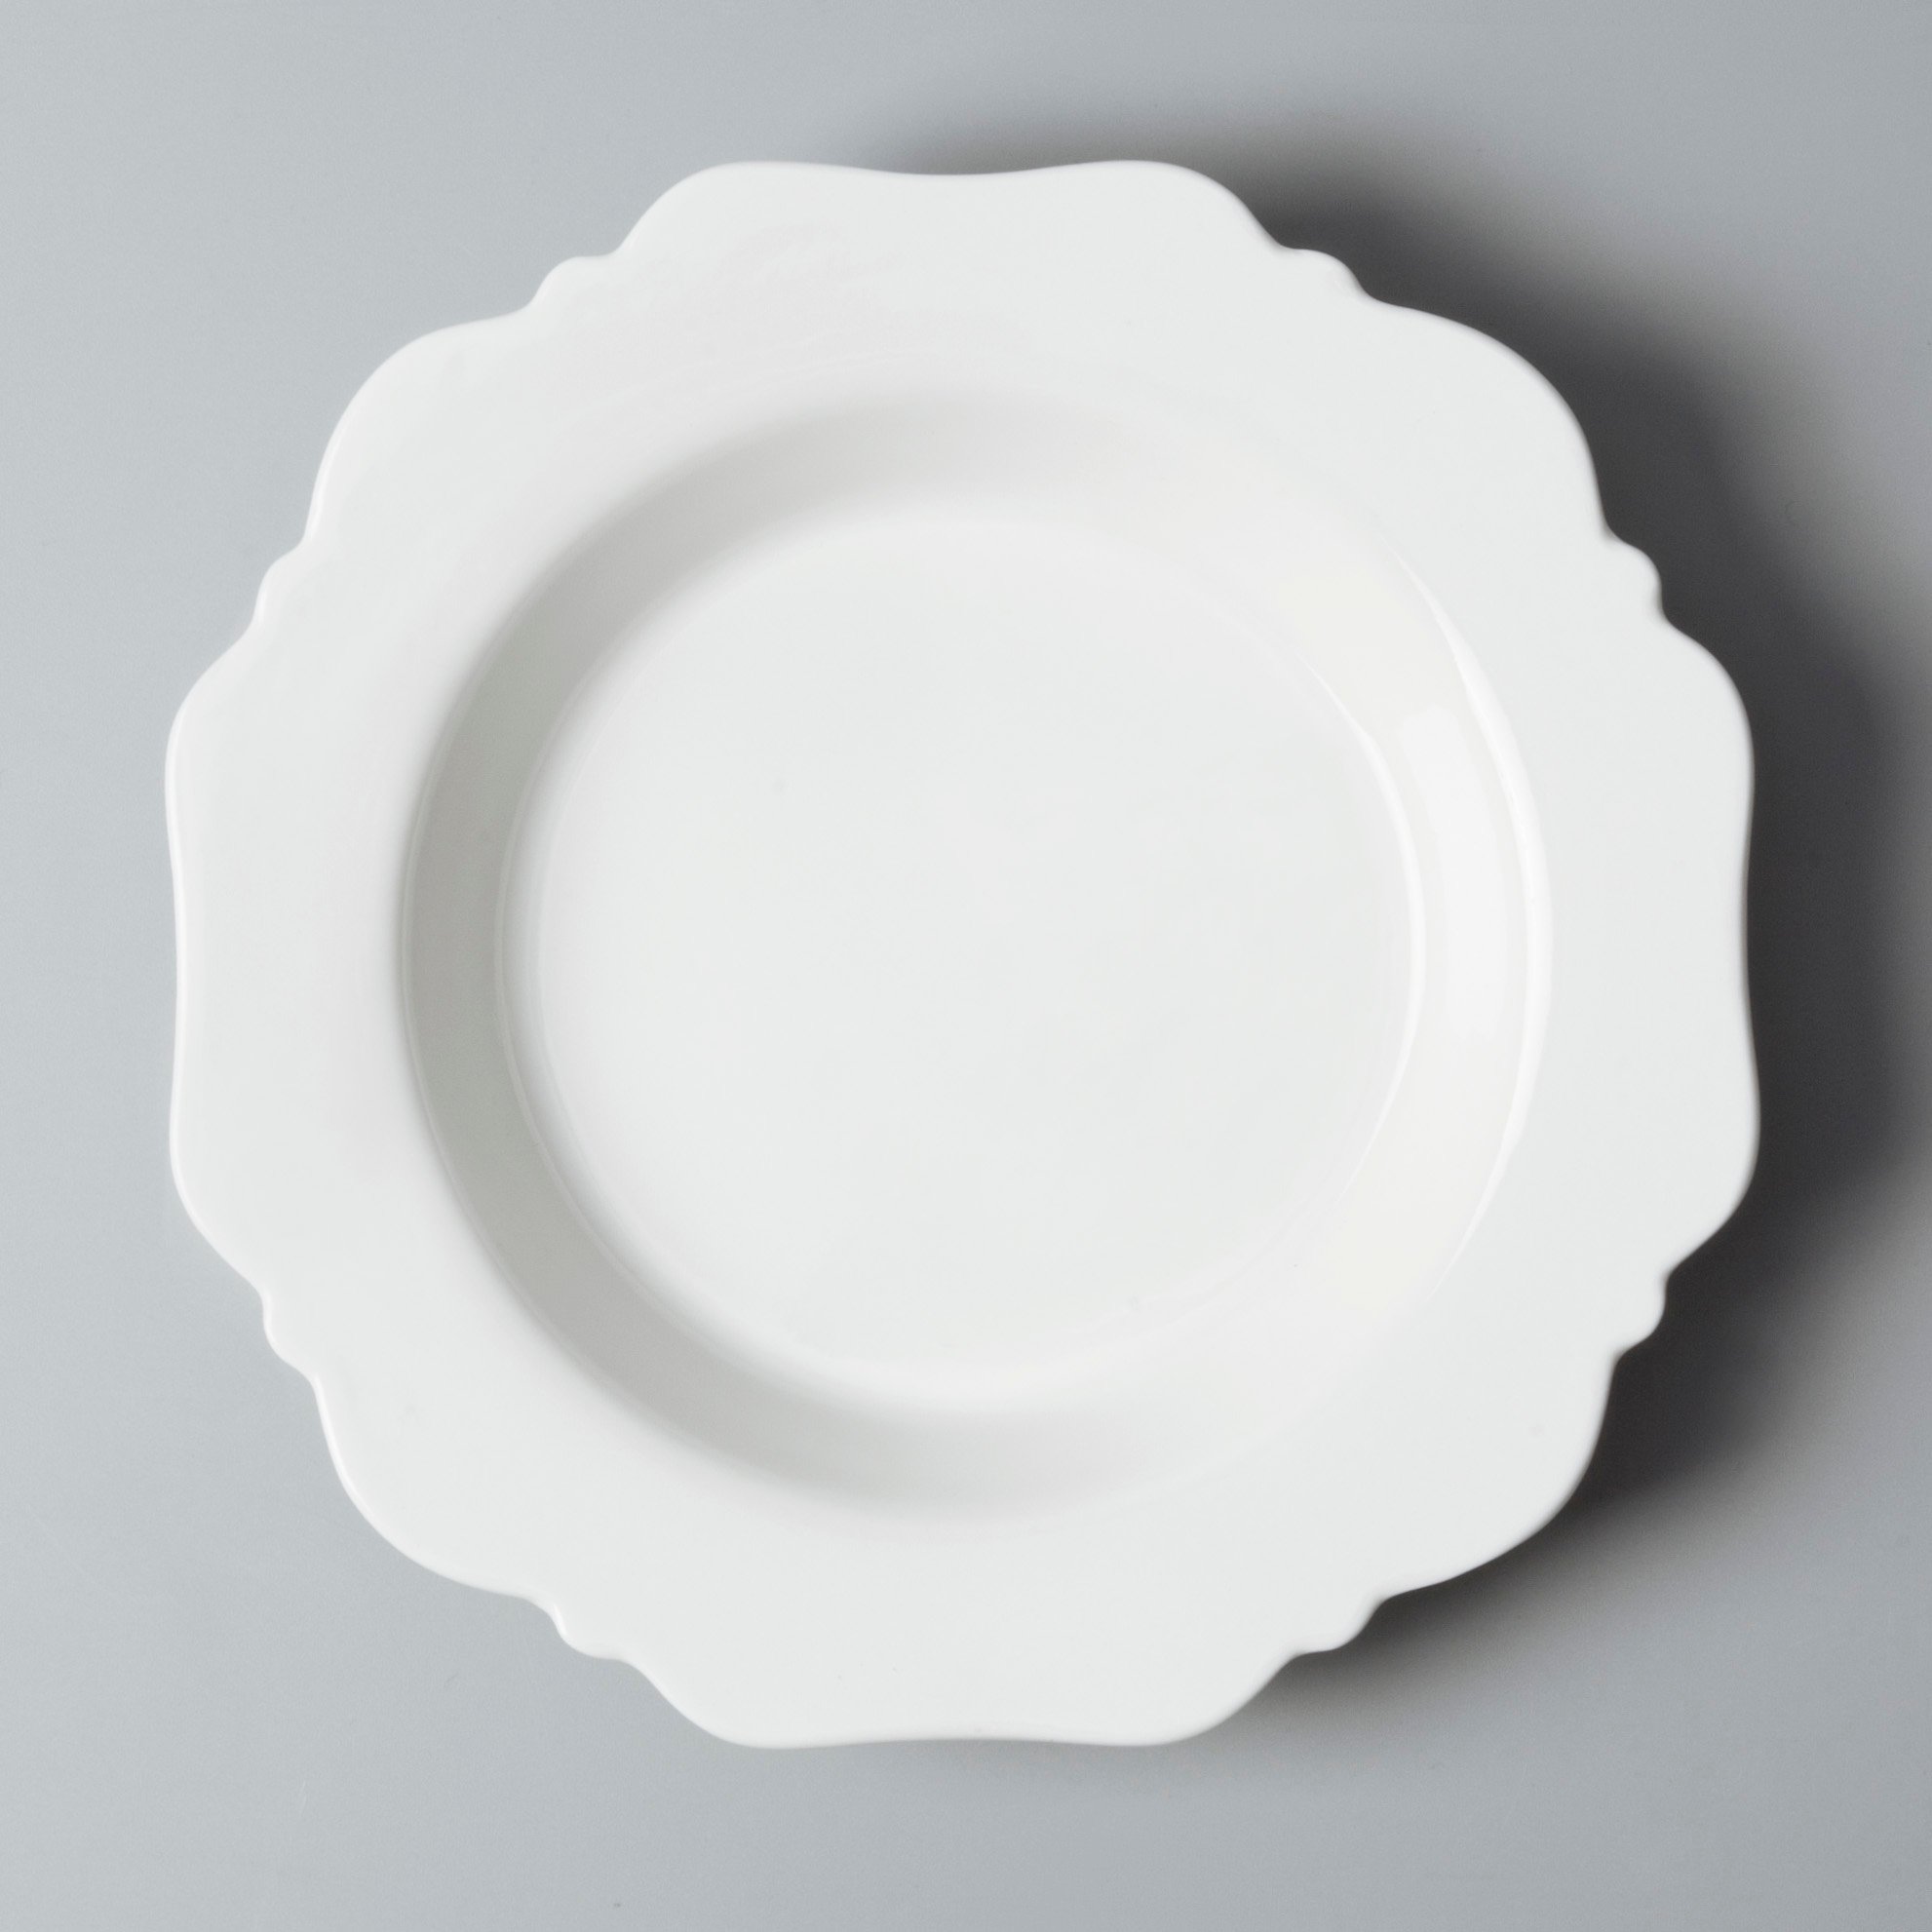 Two Eight Vietnamese cheap porcelain dinner plates series for hotel-4